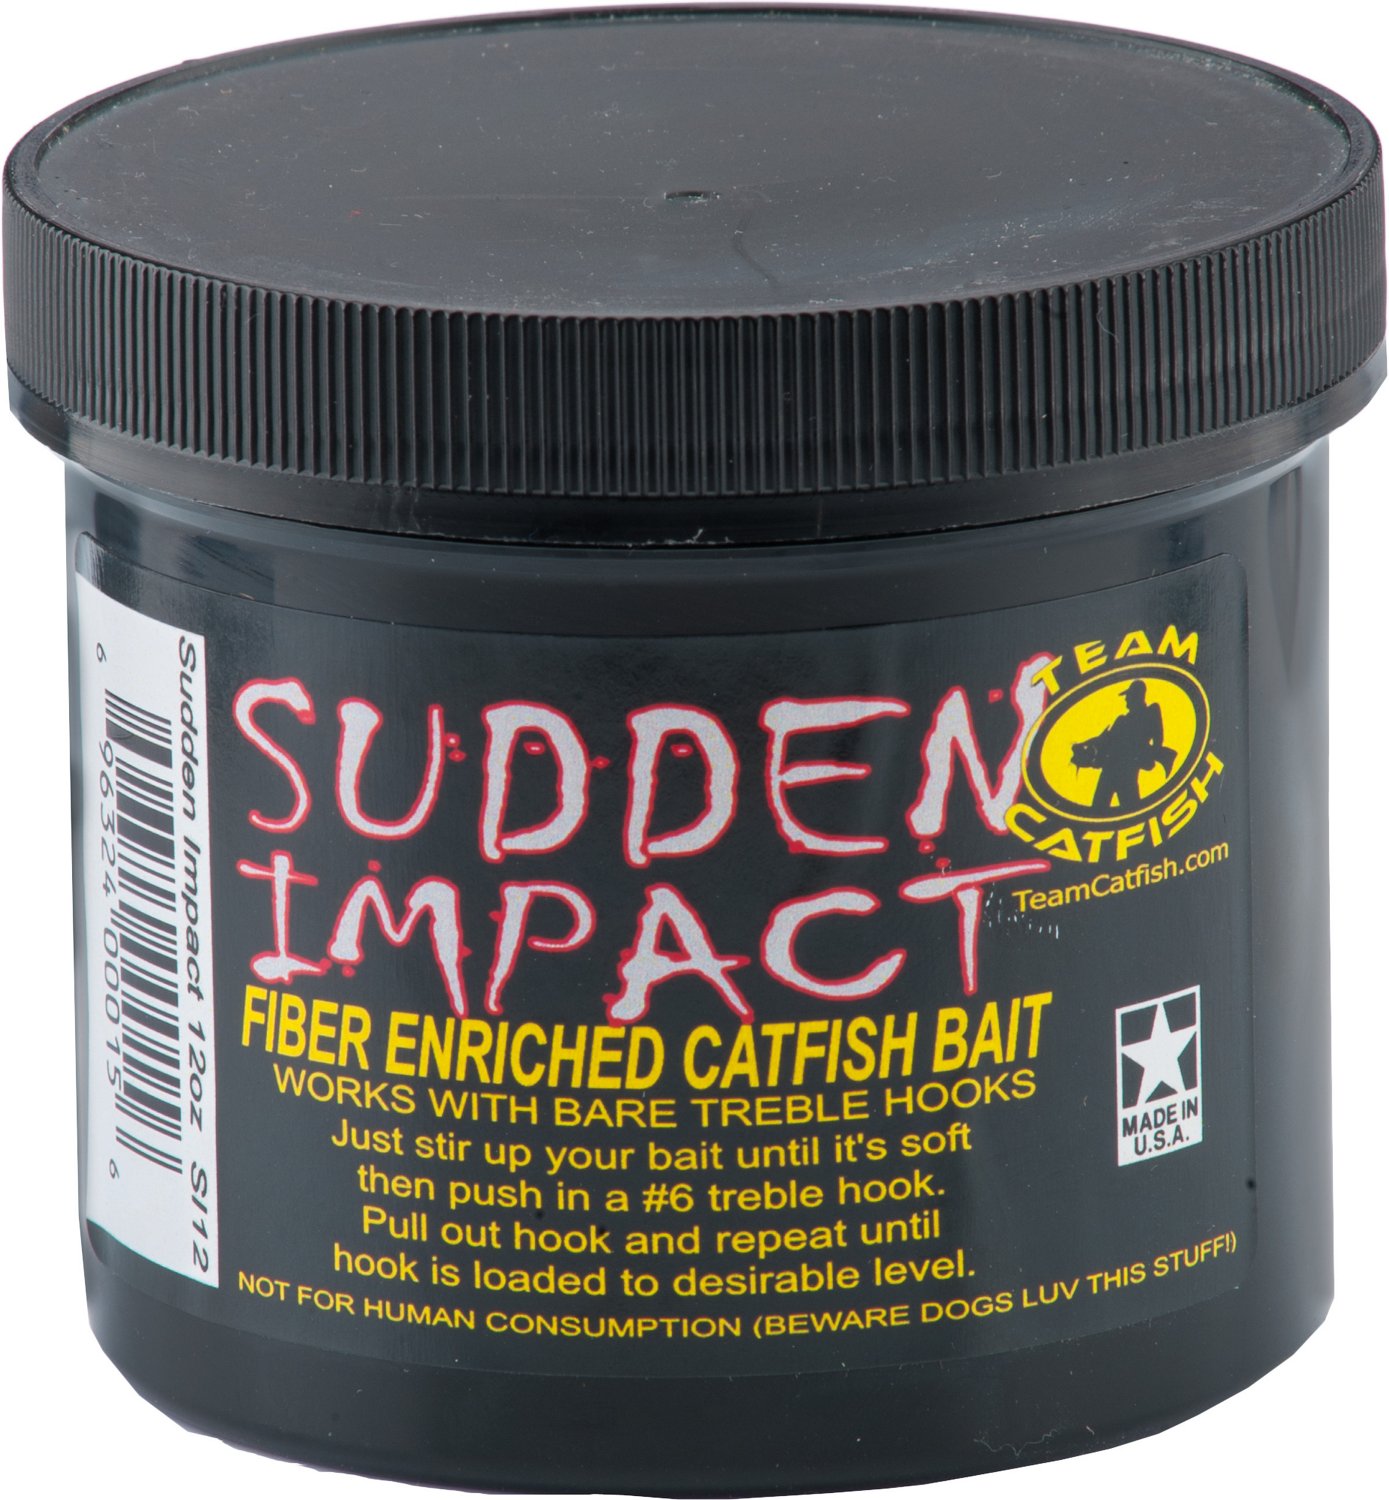 Team Catfish Sudden Impact 12 oz. Stink Bait